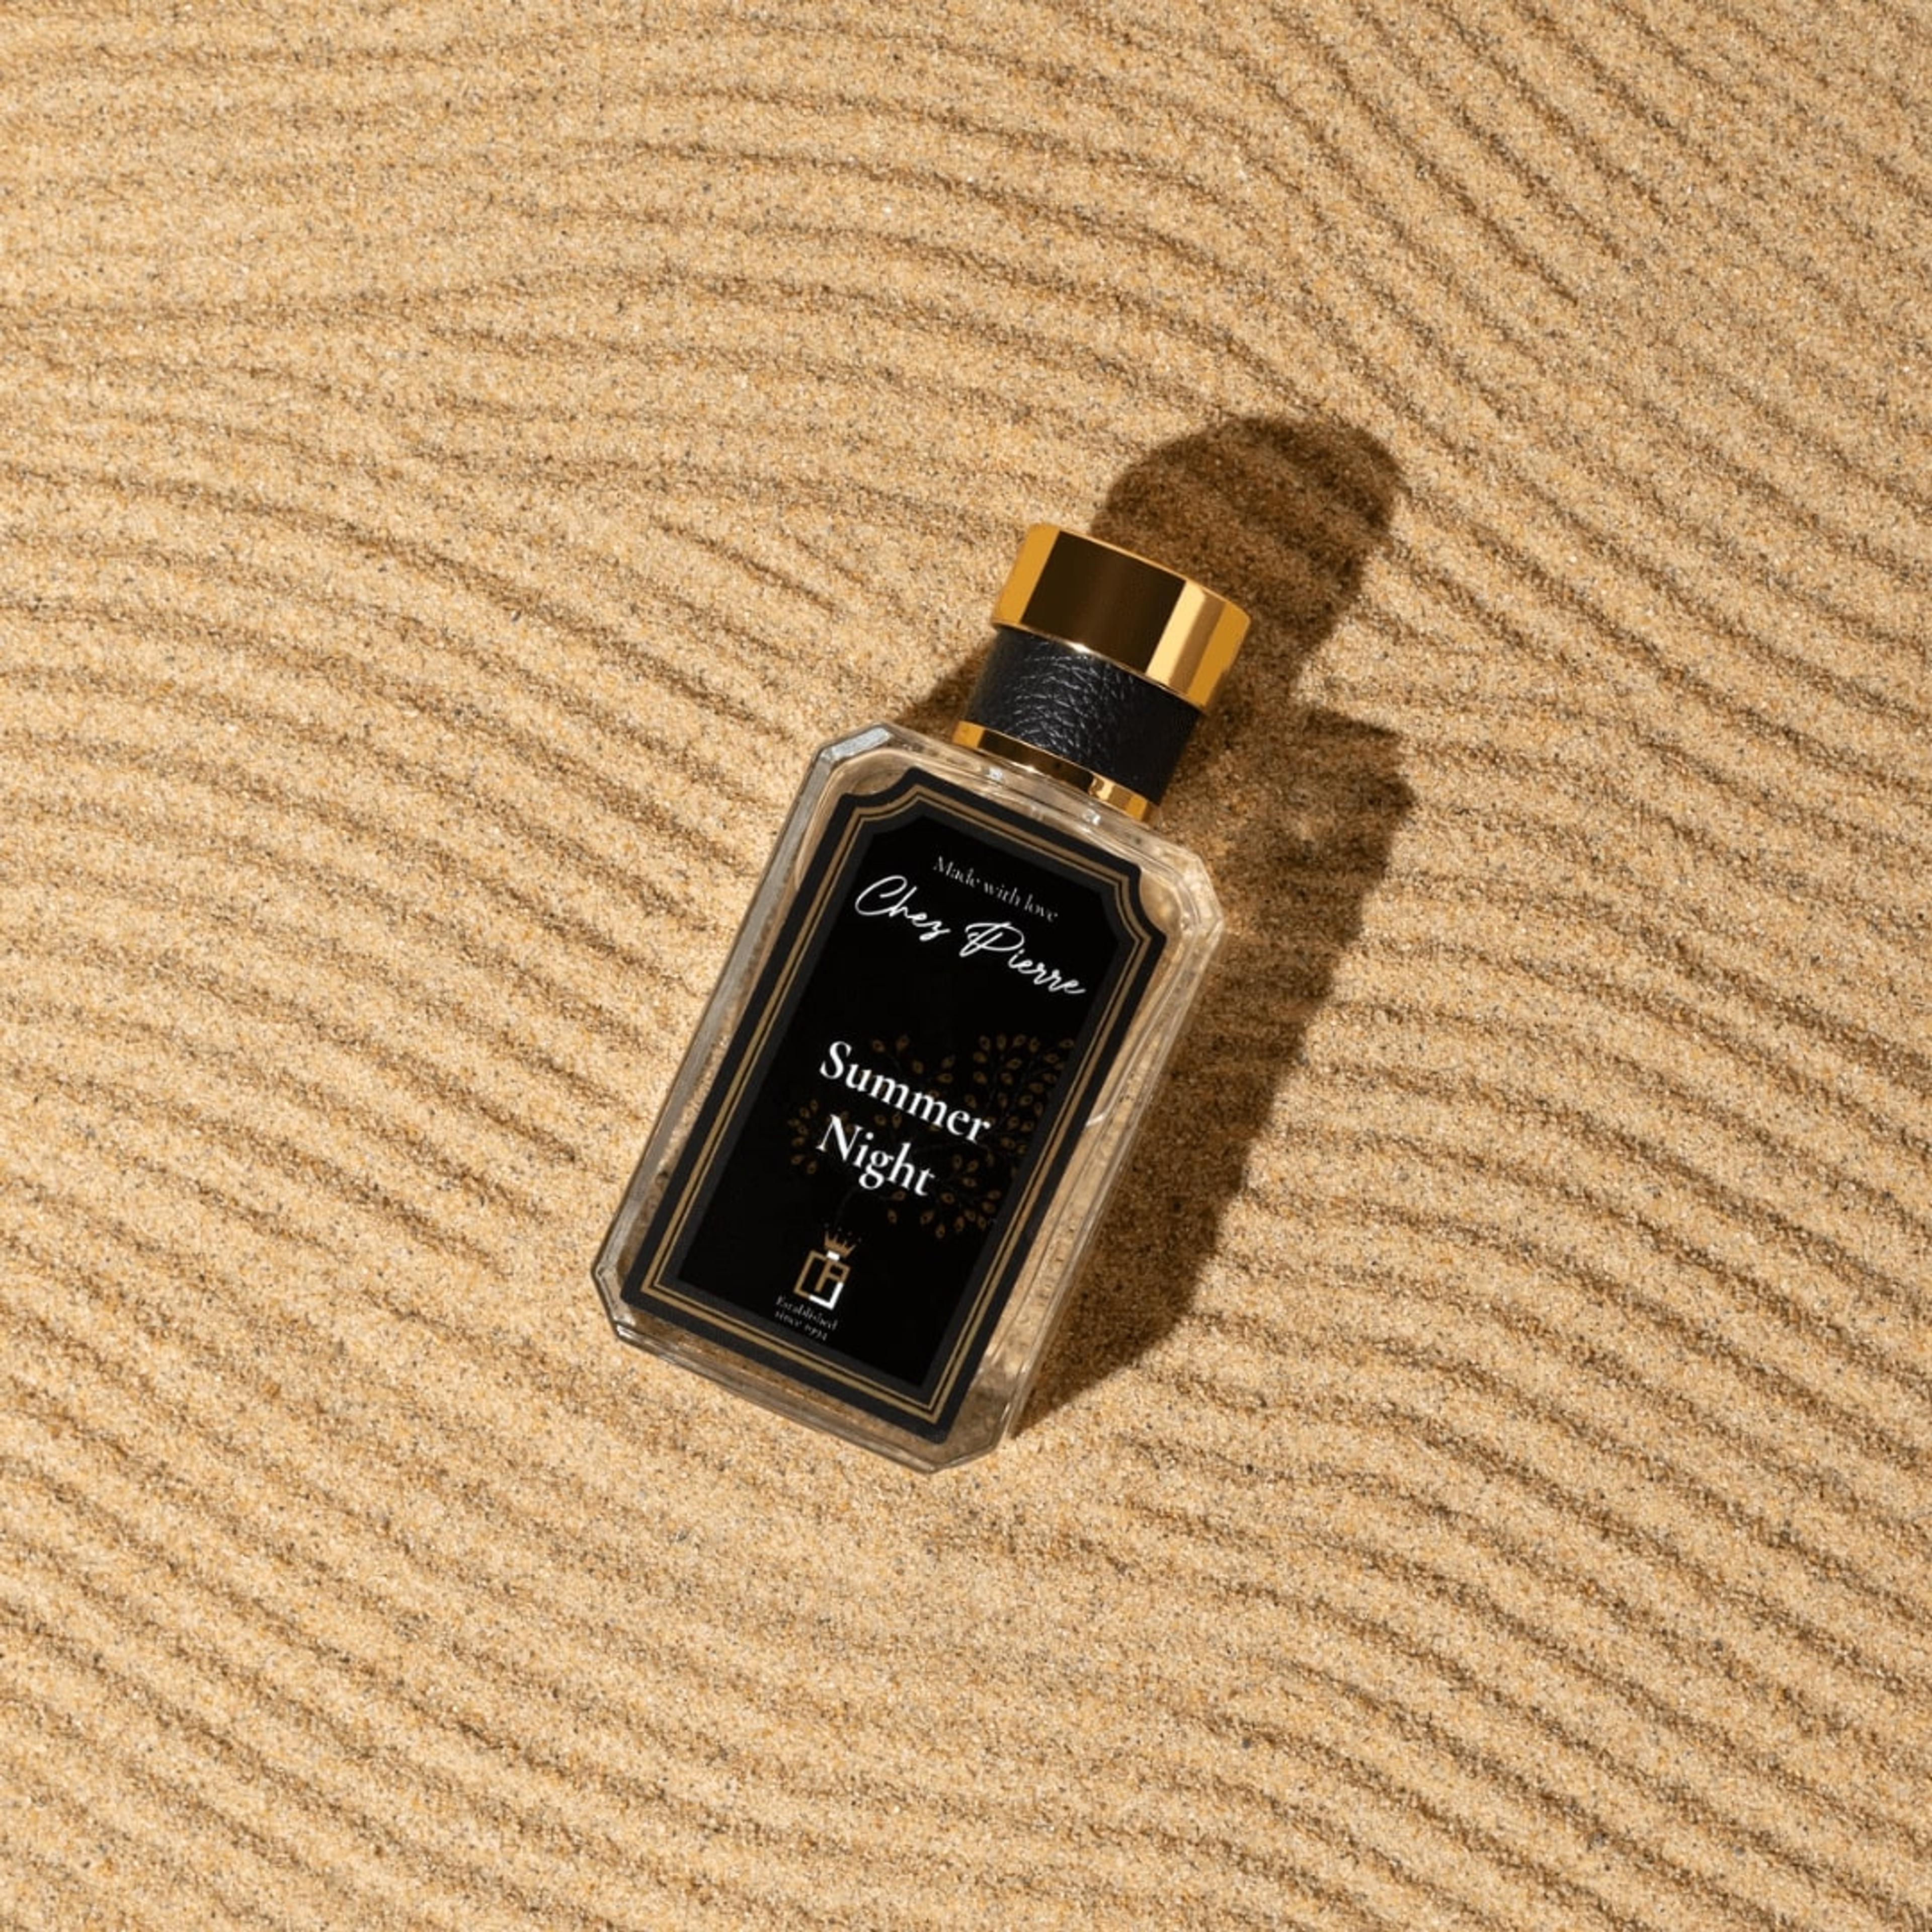 Chez Pierre's Summer Night Perfume Inspired By La Nuit de l'Homme